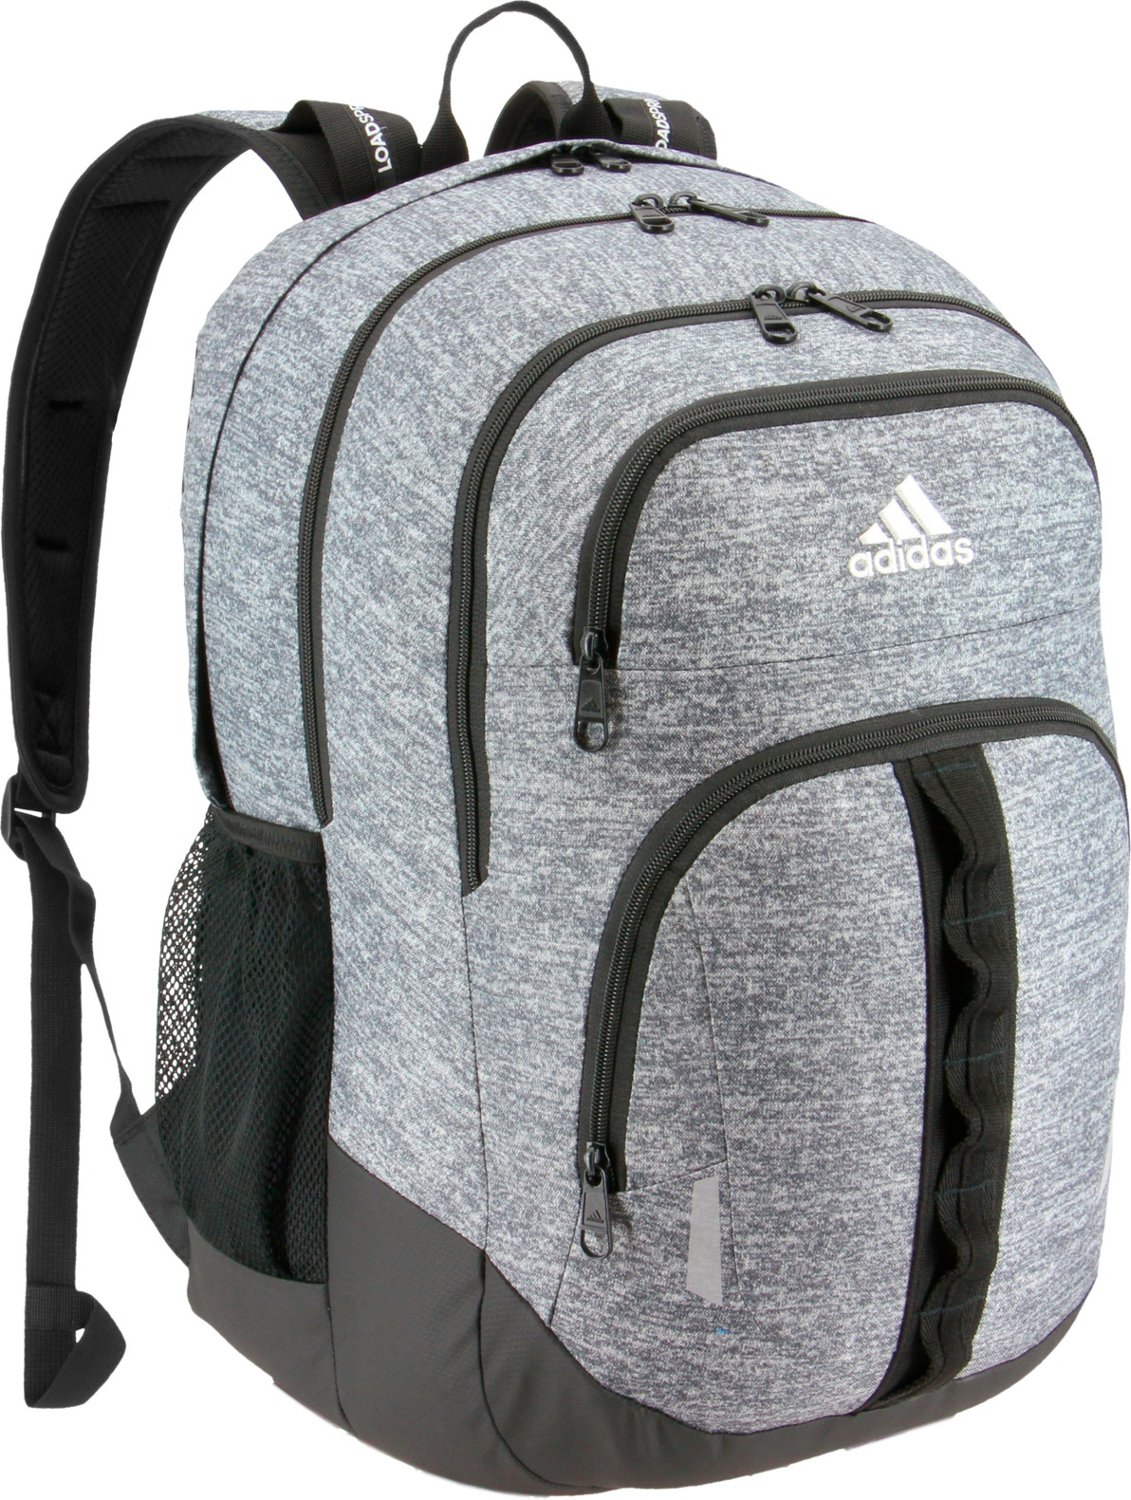 academy sports adidas backpacks